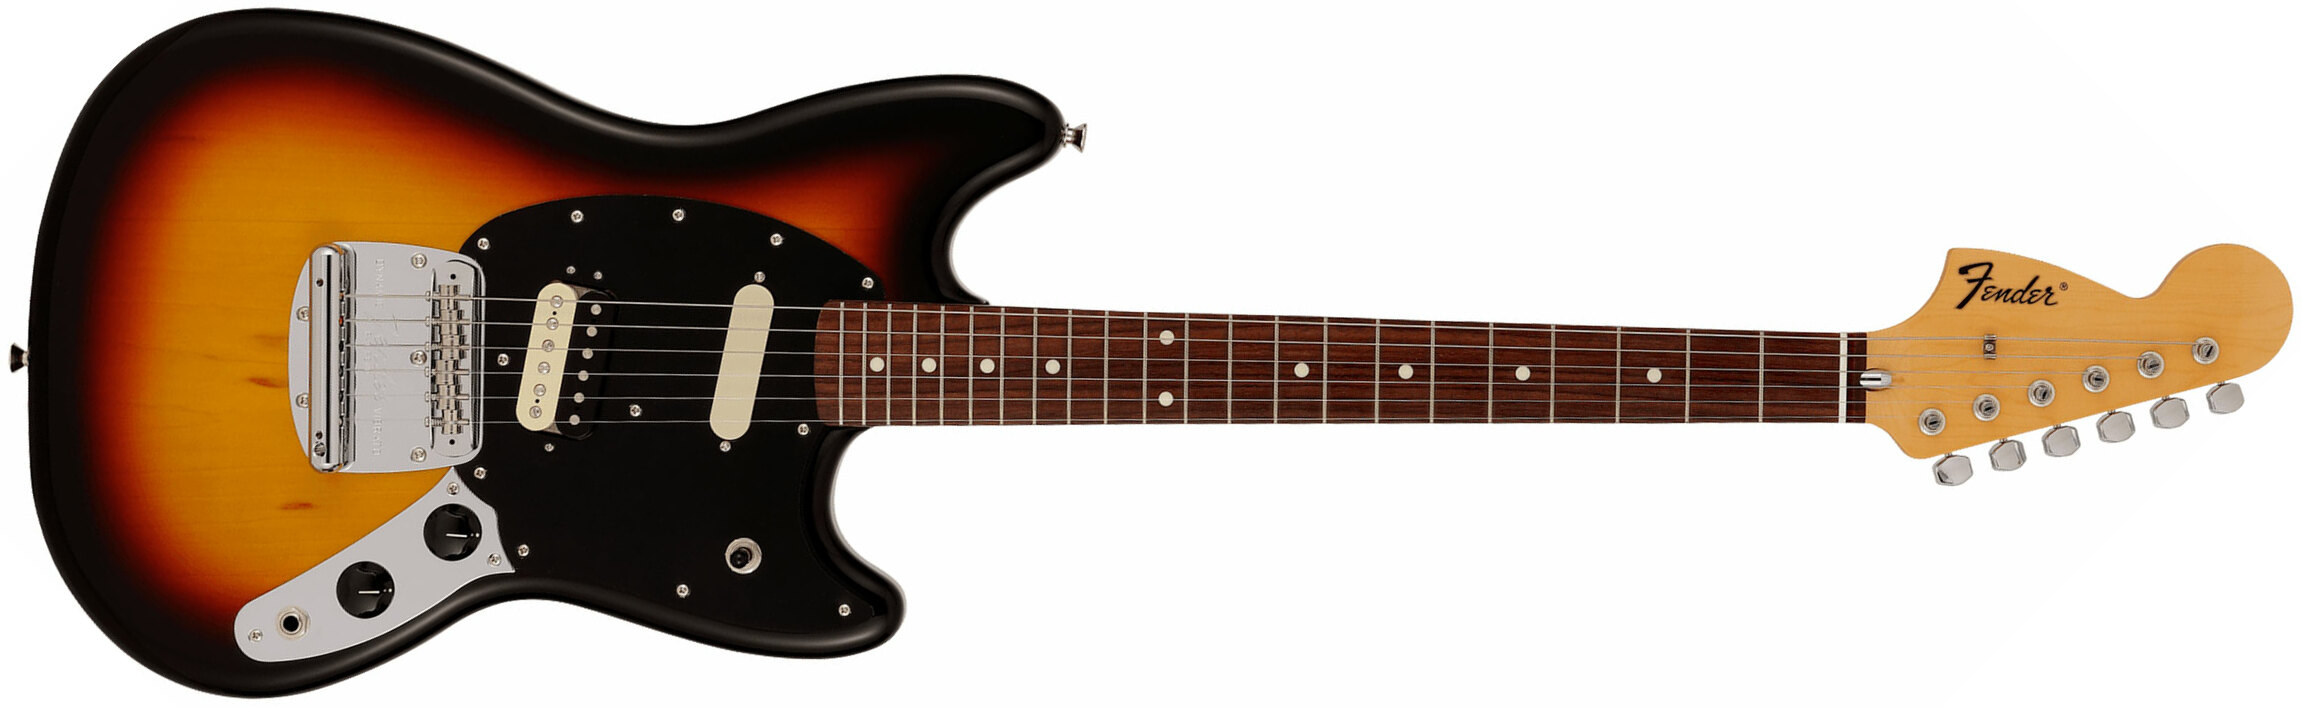 Fender Mustang Reverse Headstock Traditional Ltd Jap Hs Trem Rw - 3-color Sunburst - Elektrische gitaar in Str-vorm - Main picture